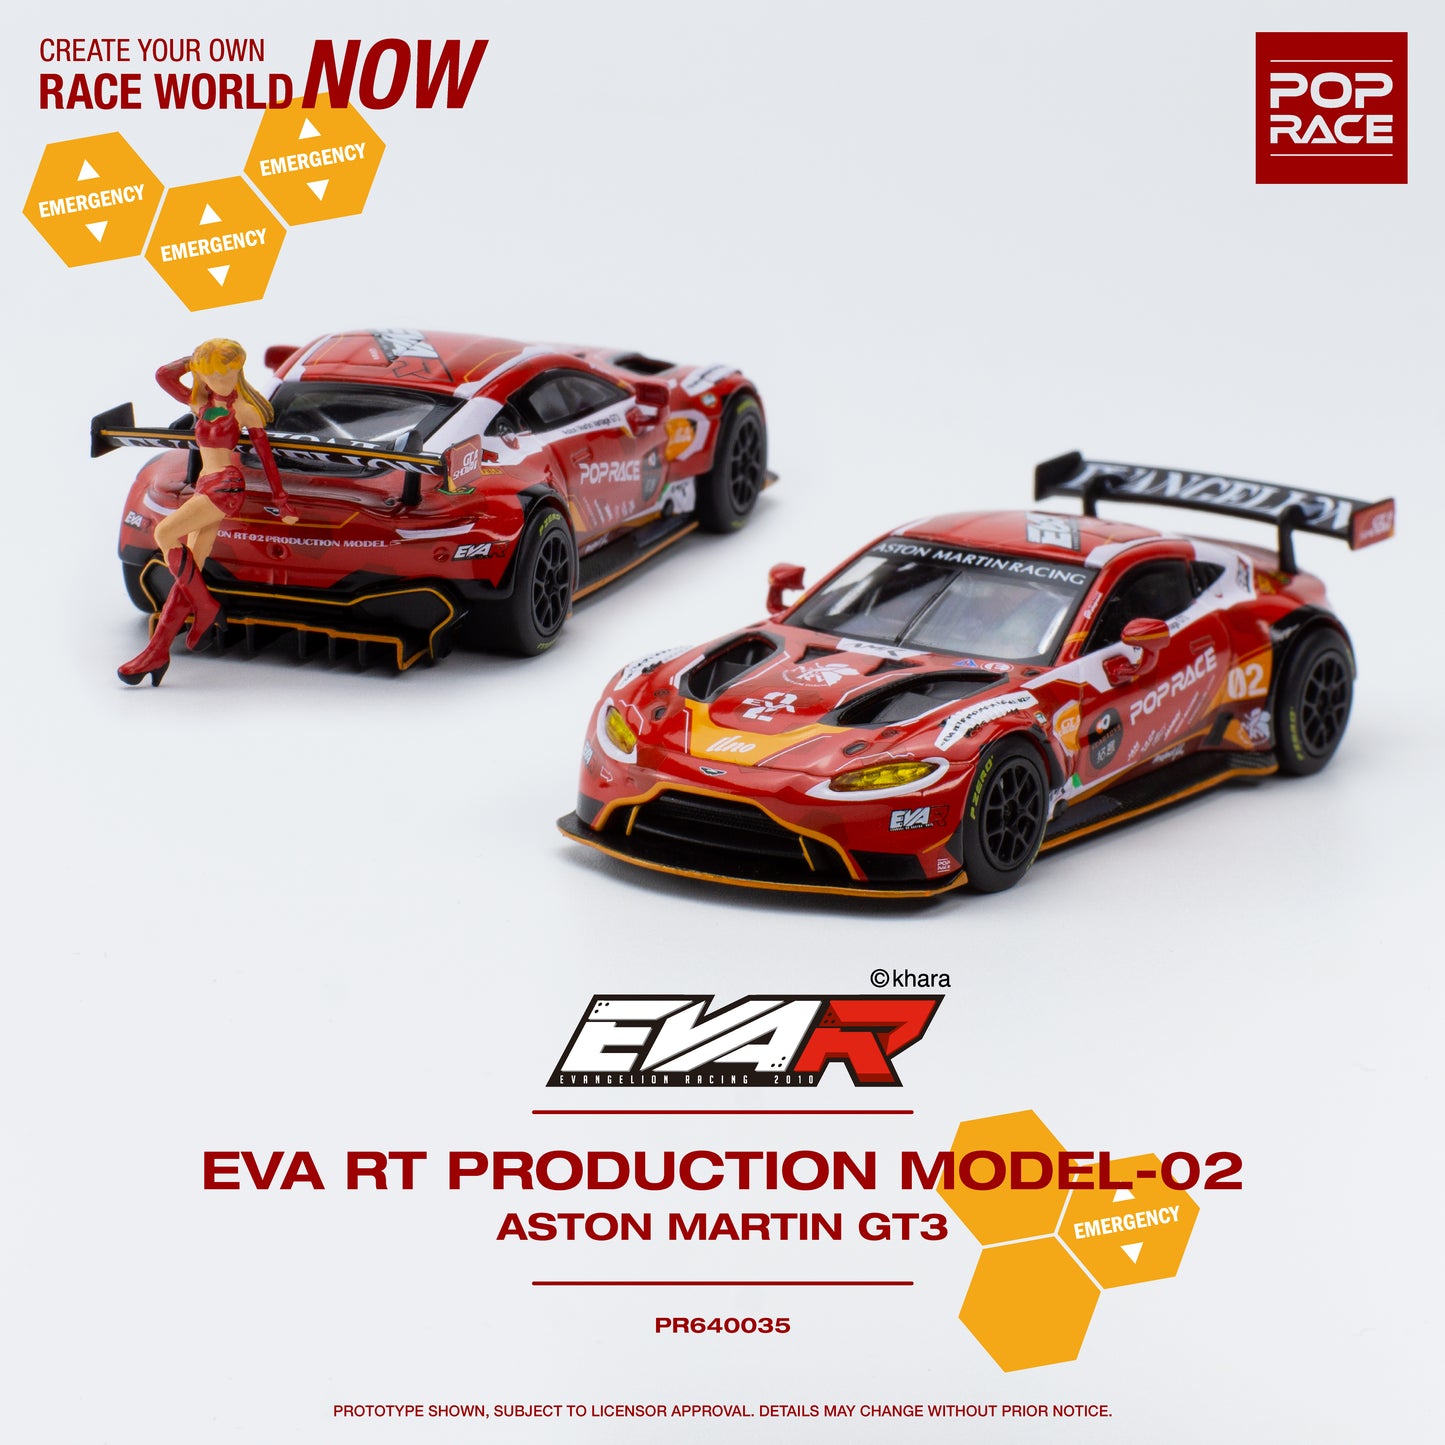 Pop Race 1/64 EVA RT PRODUCTION MODEL-02 ASTON MARTIN GT3 WITH FIGURE